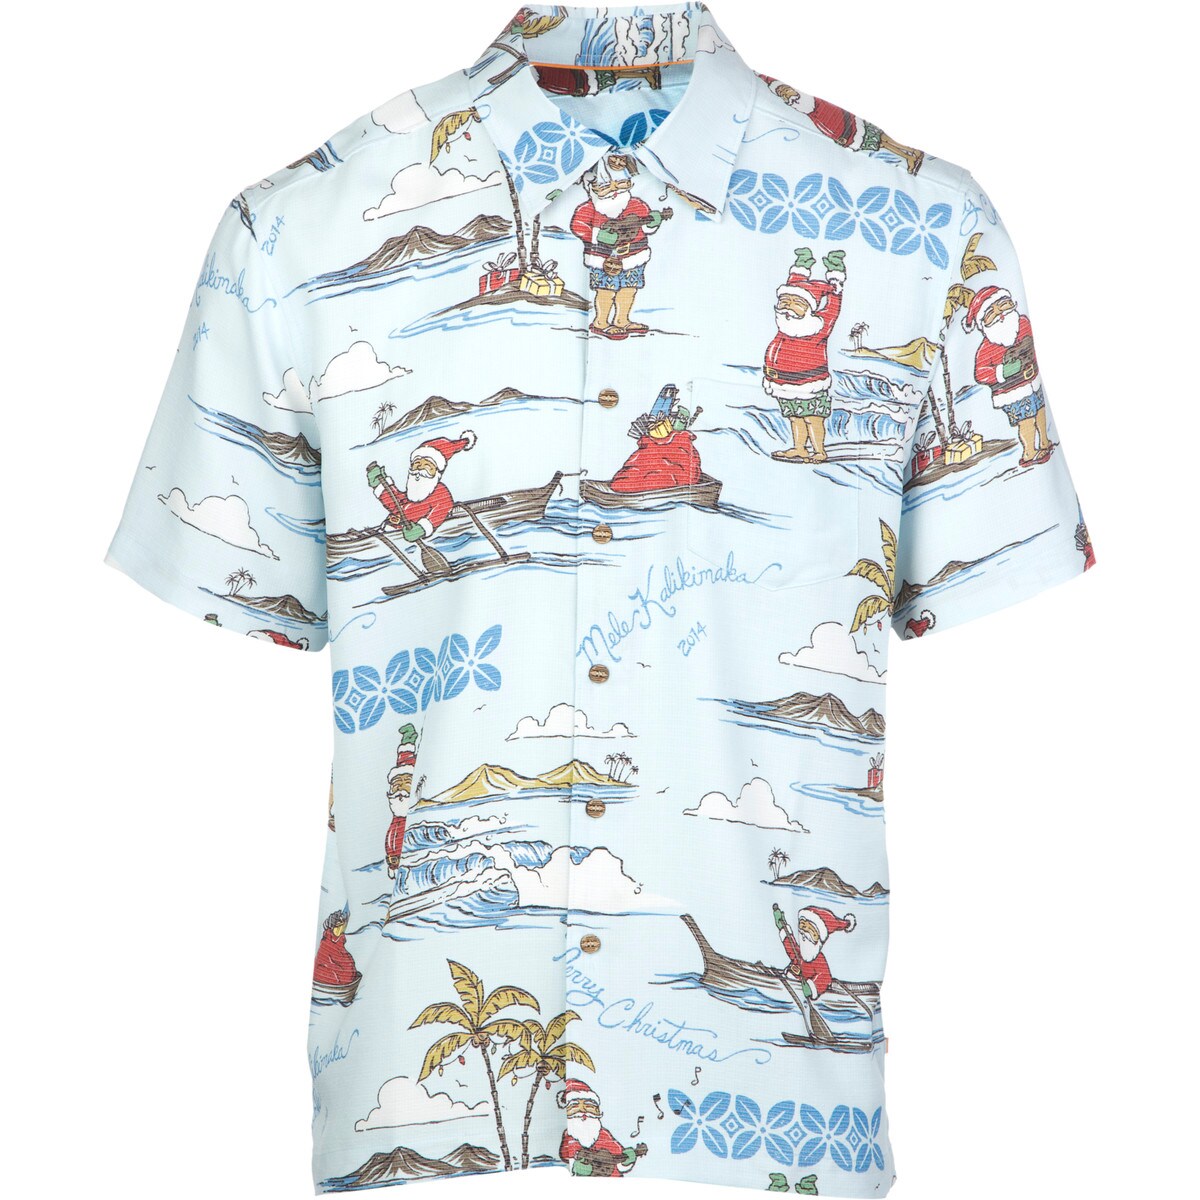 Quiksilver Waterman Makana 2014 Shirt - Short-Sleeve - Men's - Clothing